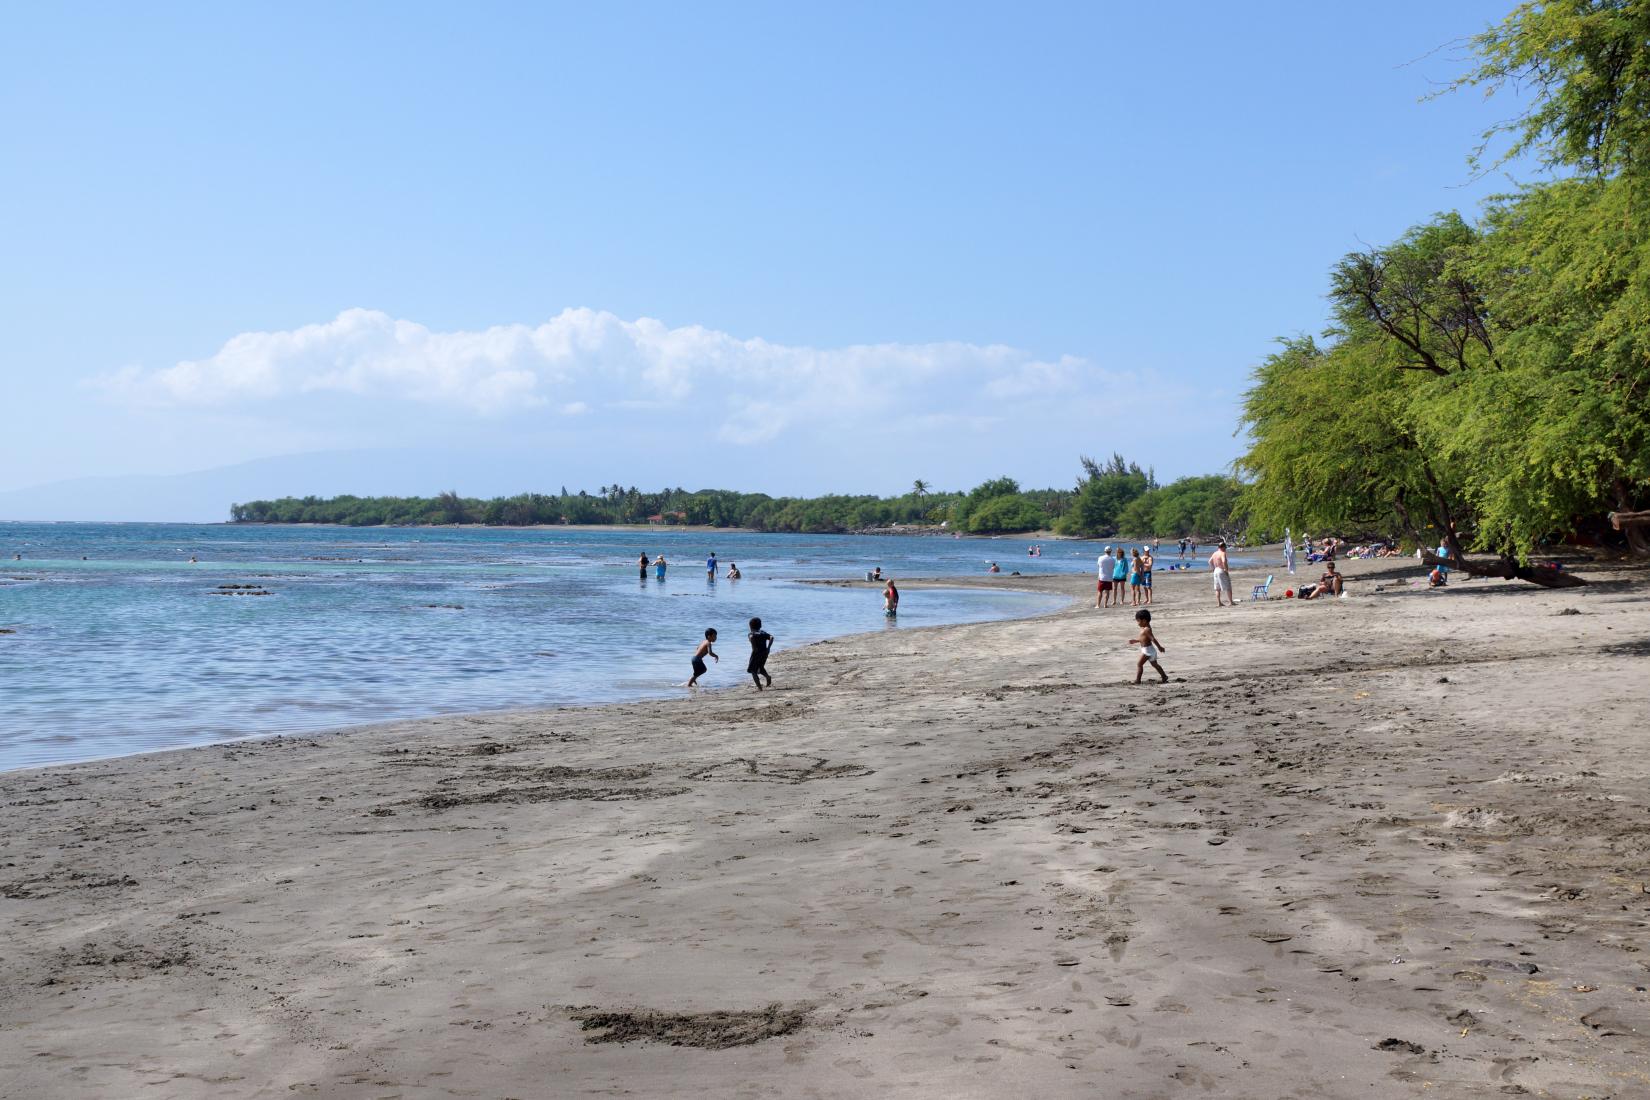 Sandee - Olowalu Beach